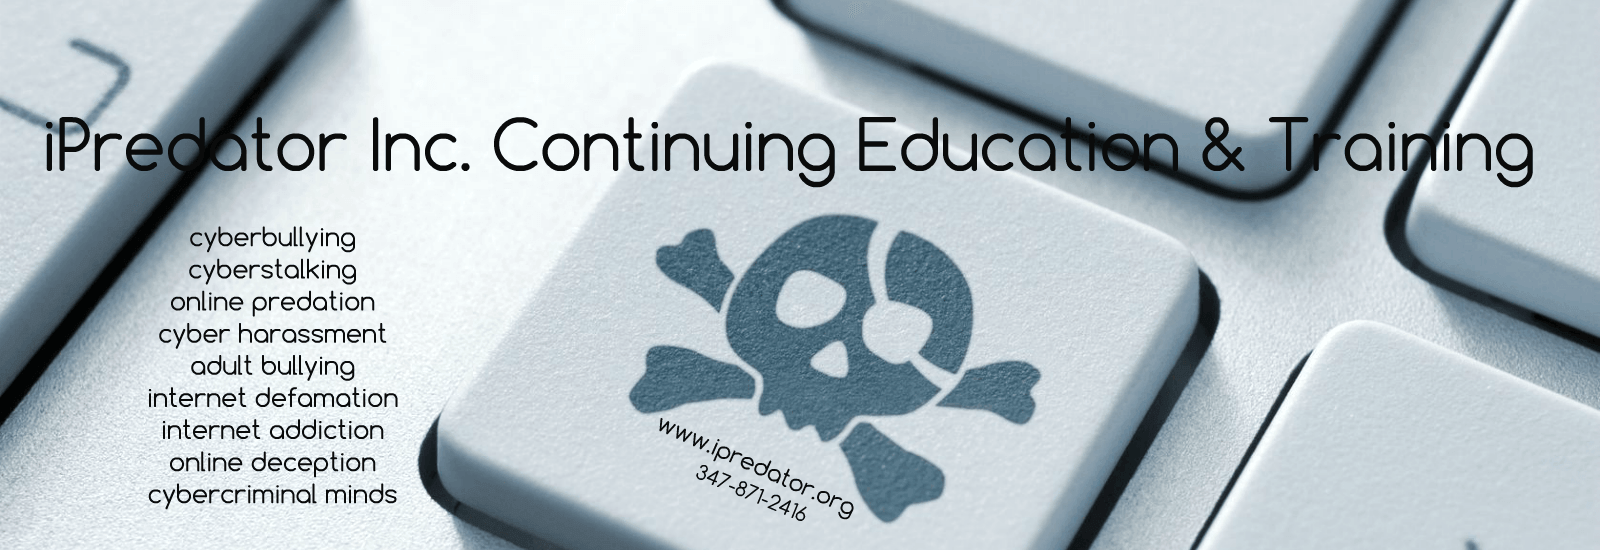 continuing-education-cyberstalking-cyberbullying-training-ipredator-inc.-new-york-1600x550